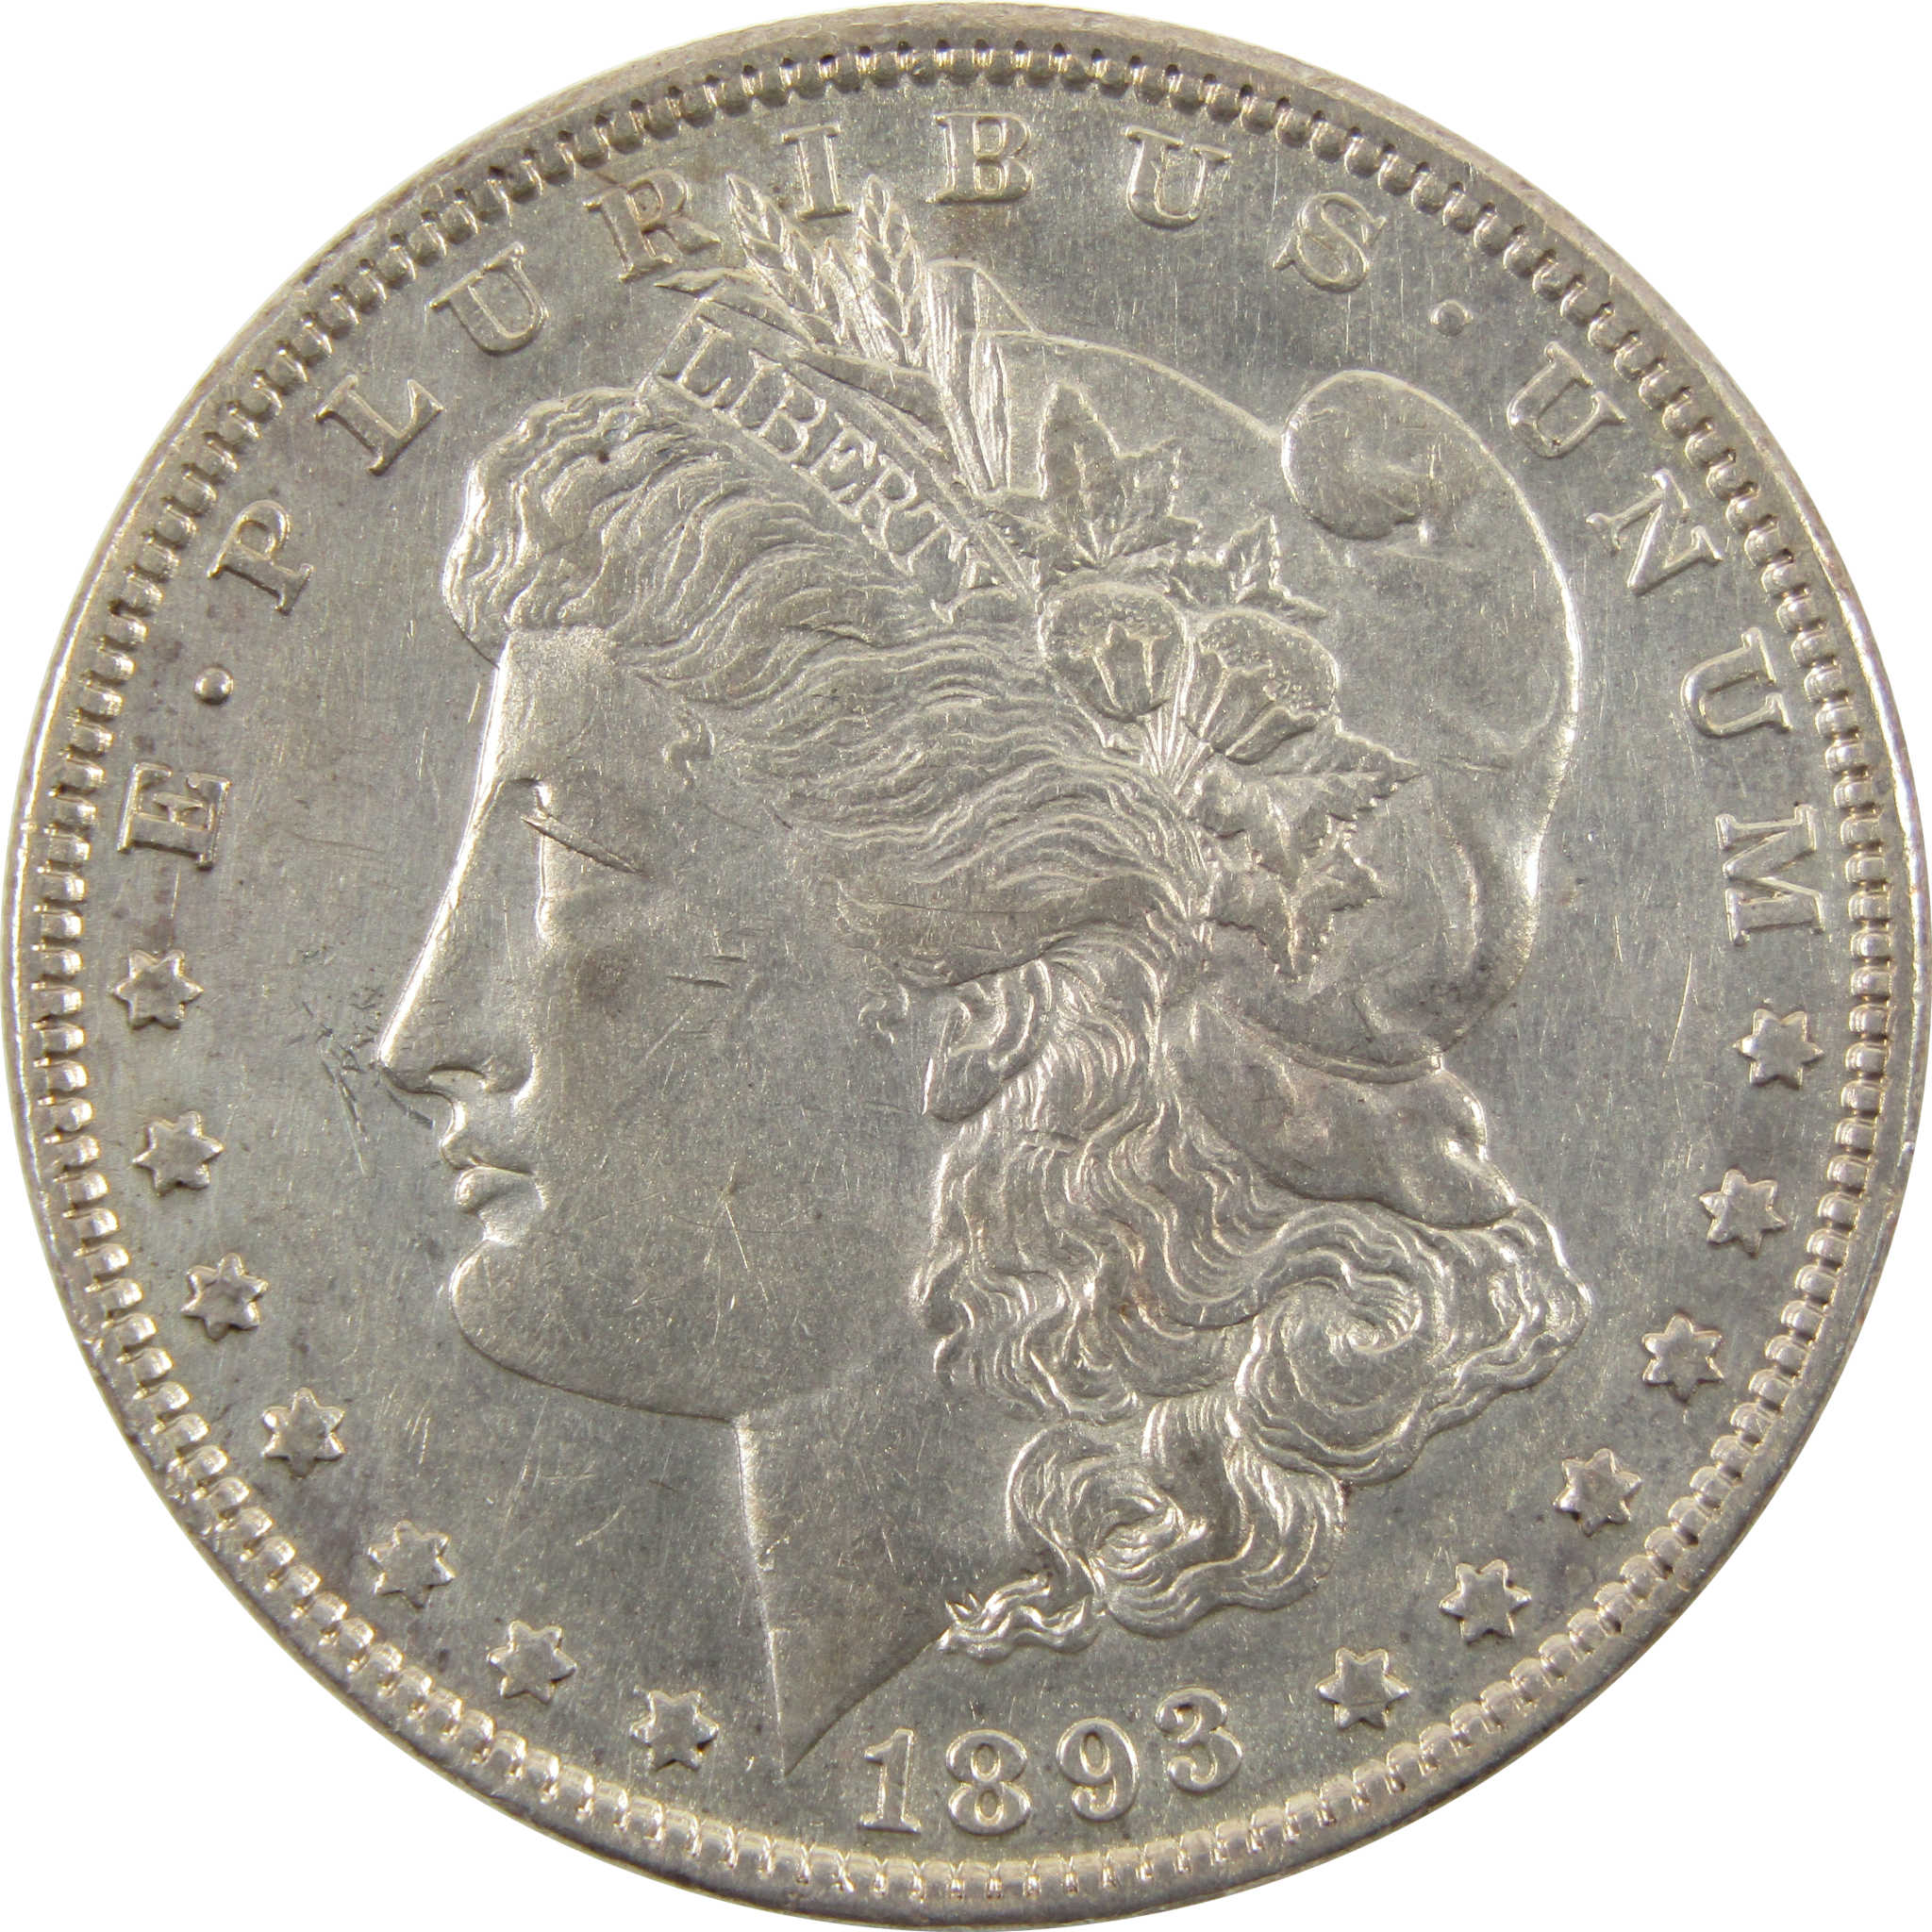 1893 Morgan Dollar AU About Unc Details 90% Silver $1 SKU:I10647 - Morgan coin - Morgan silver dollar - Morgan silver dollar for sale - Profile Coins &amp; Collectibles